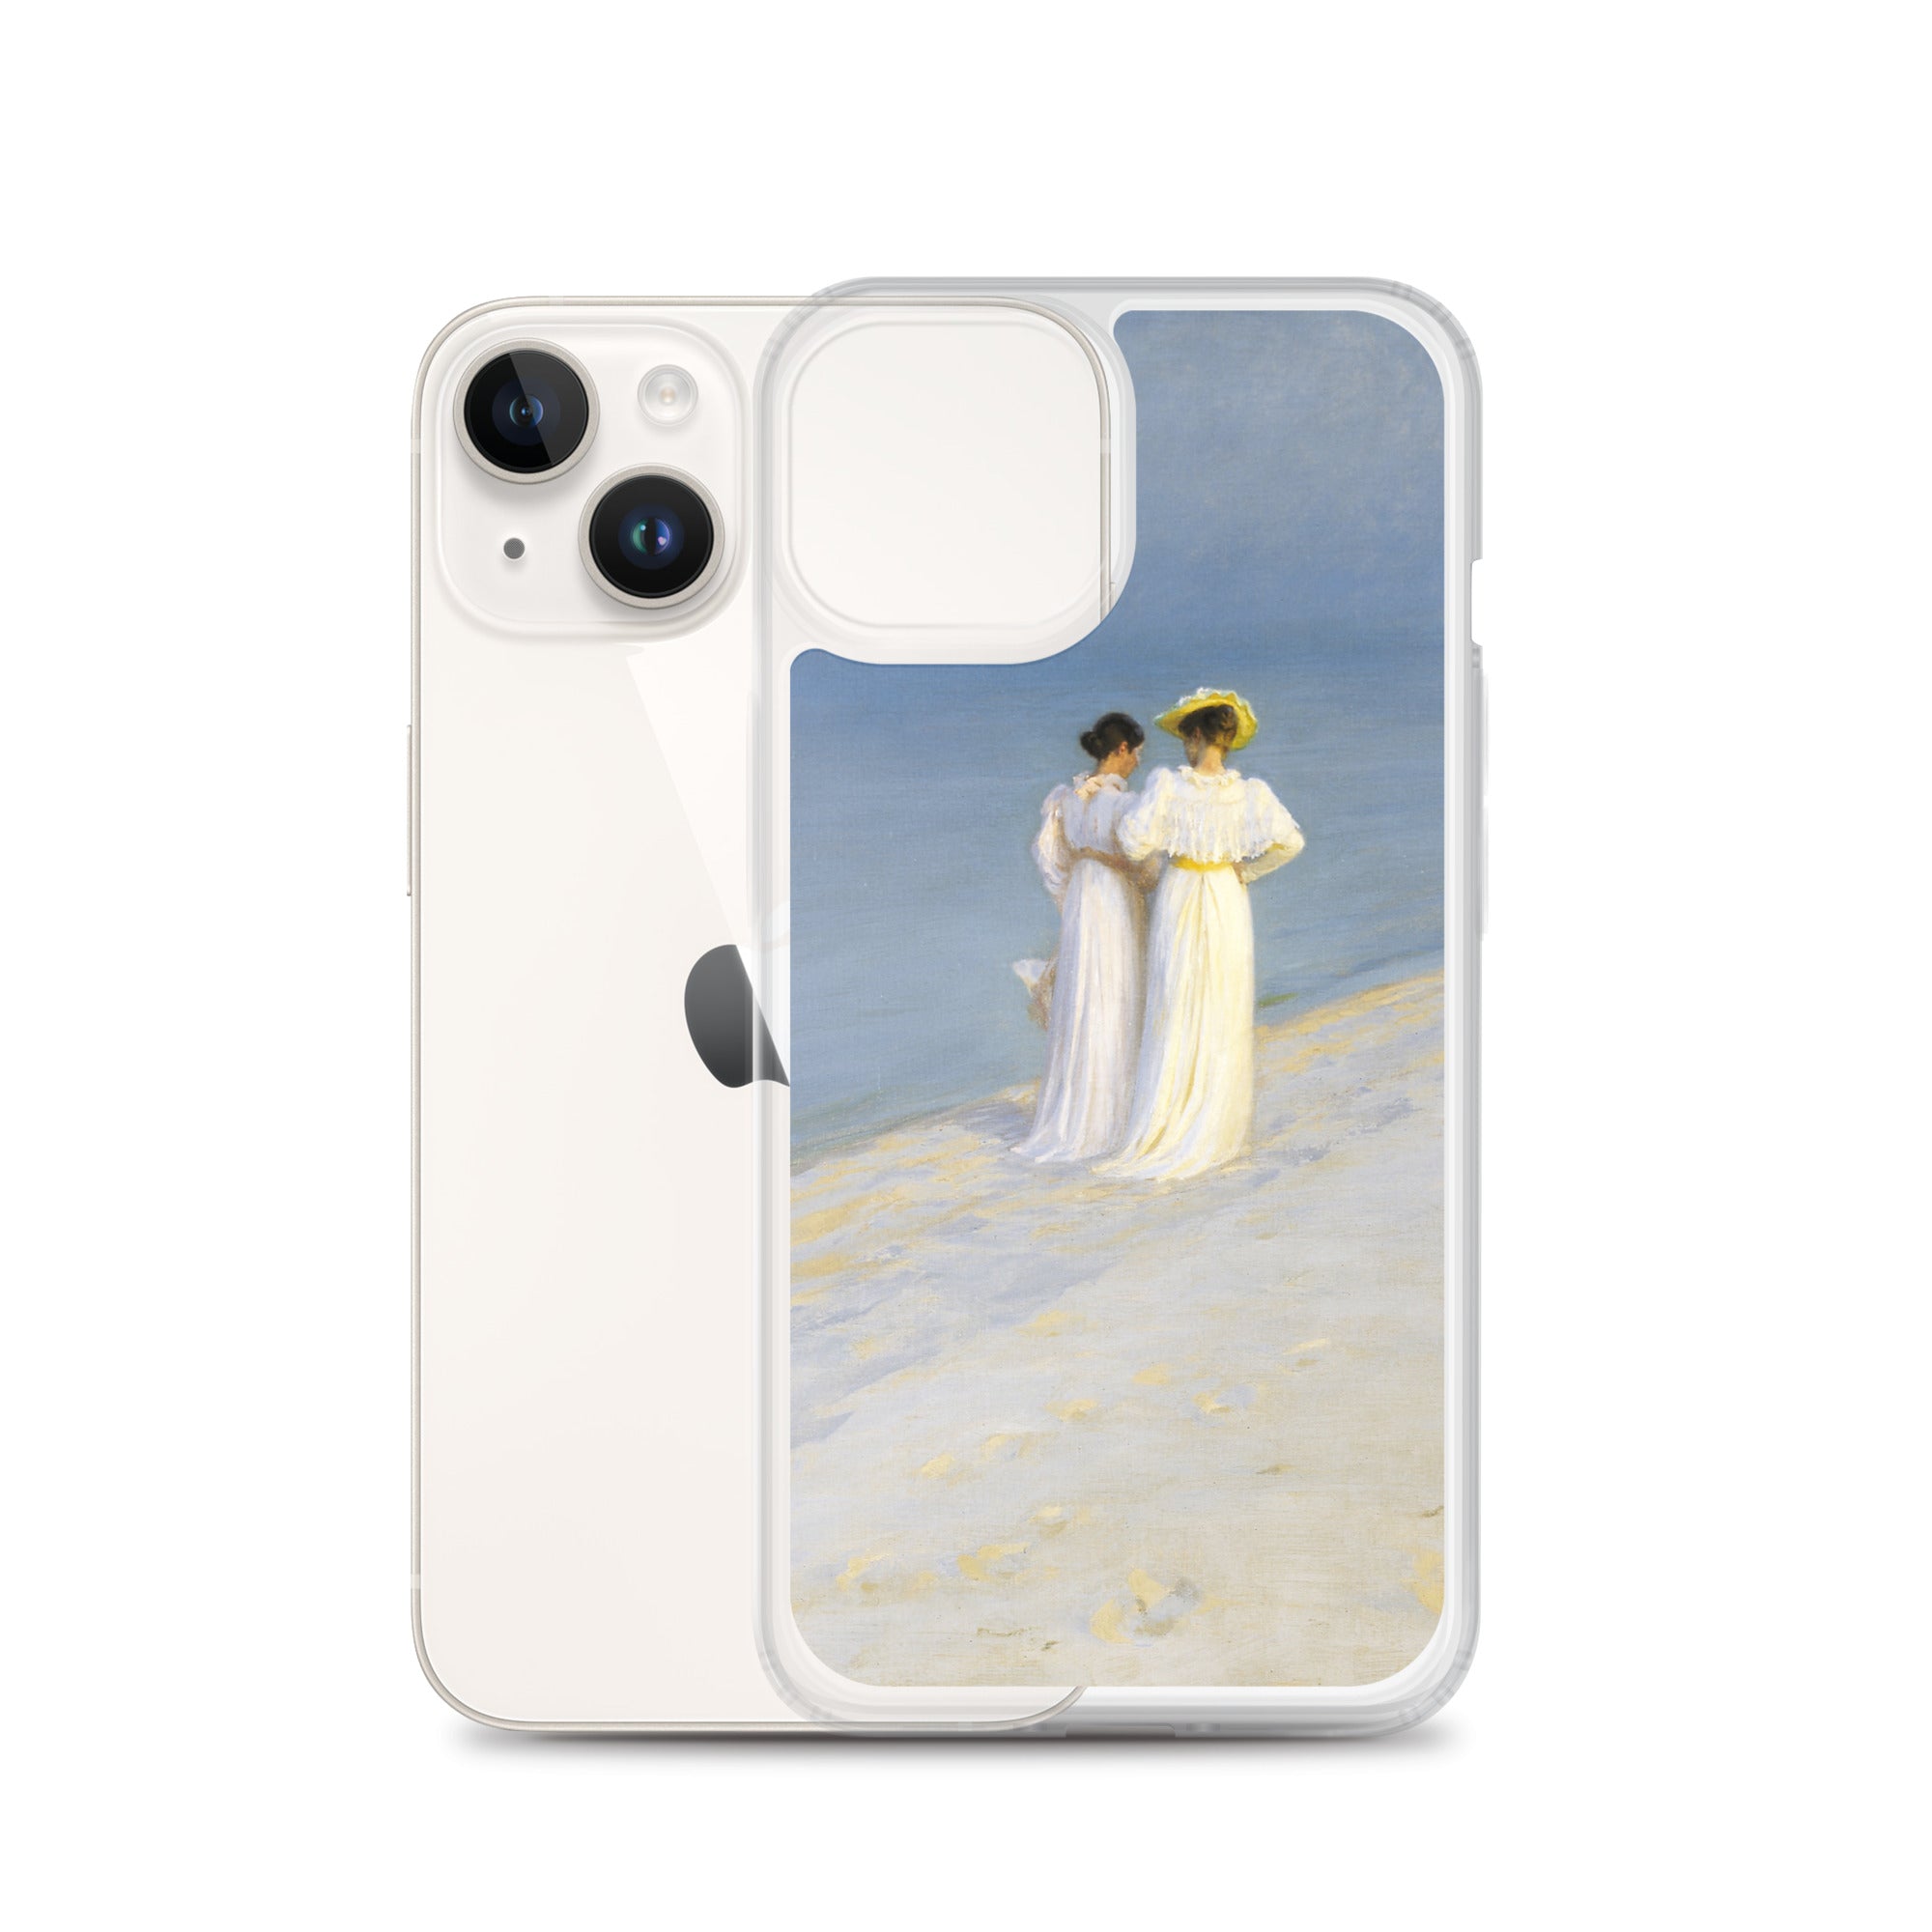 PS Krøyer „Sommerabend am Südstrand von Skagen“ – berühmtes Gemälde – iPhone®-Hülle | Transparente Kunsthülle für iPhone®